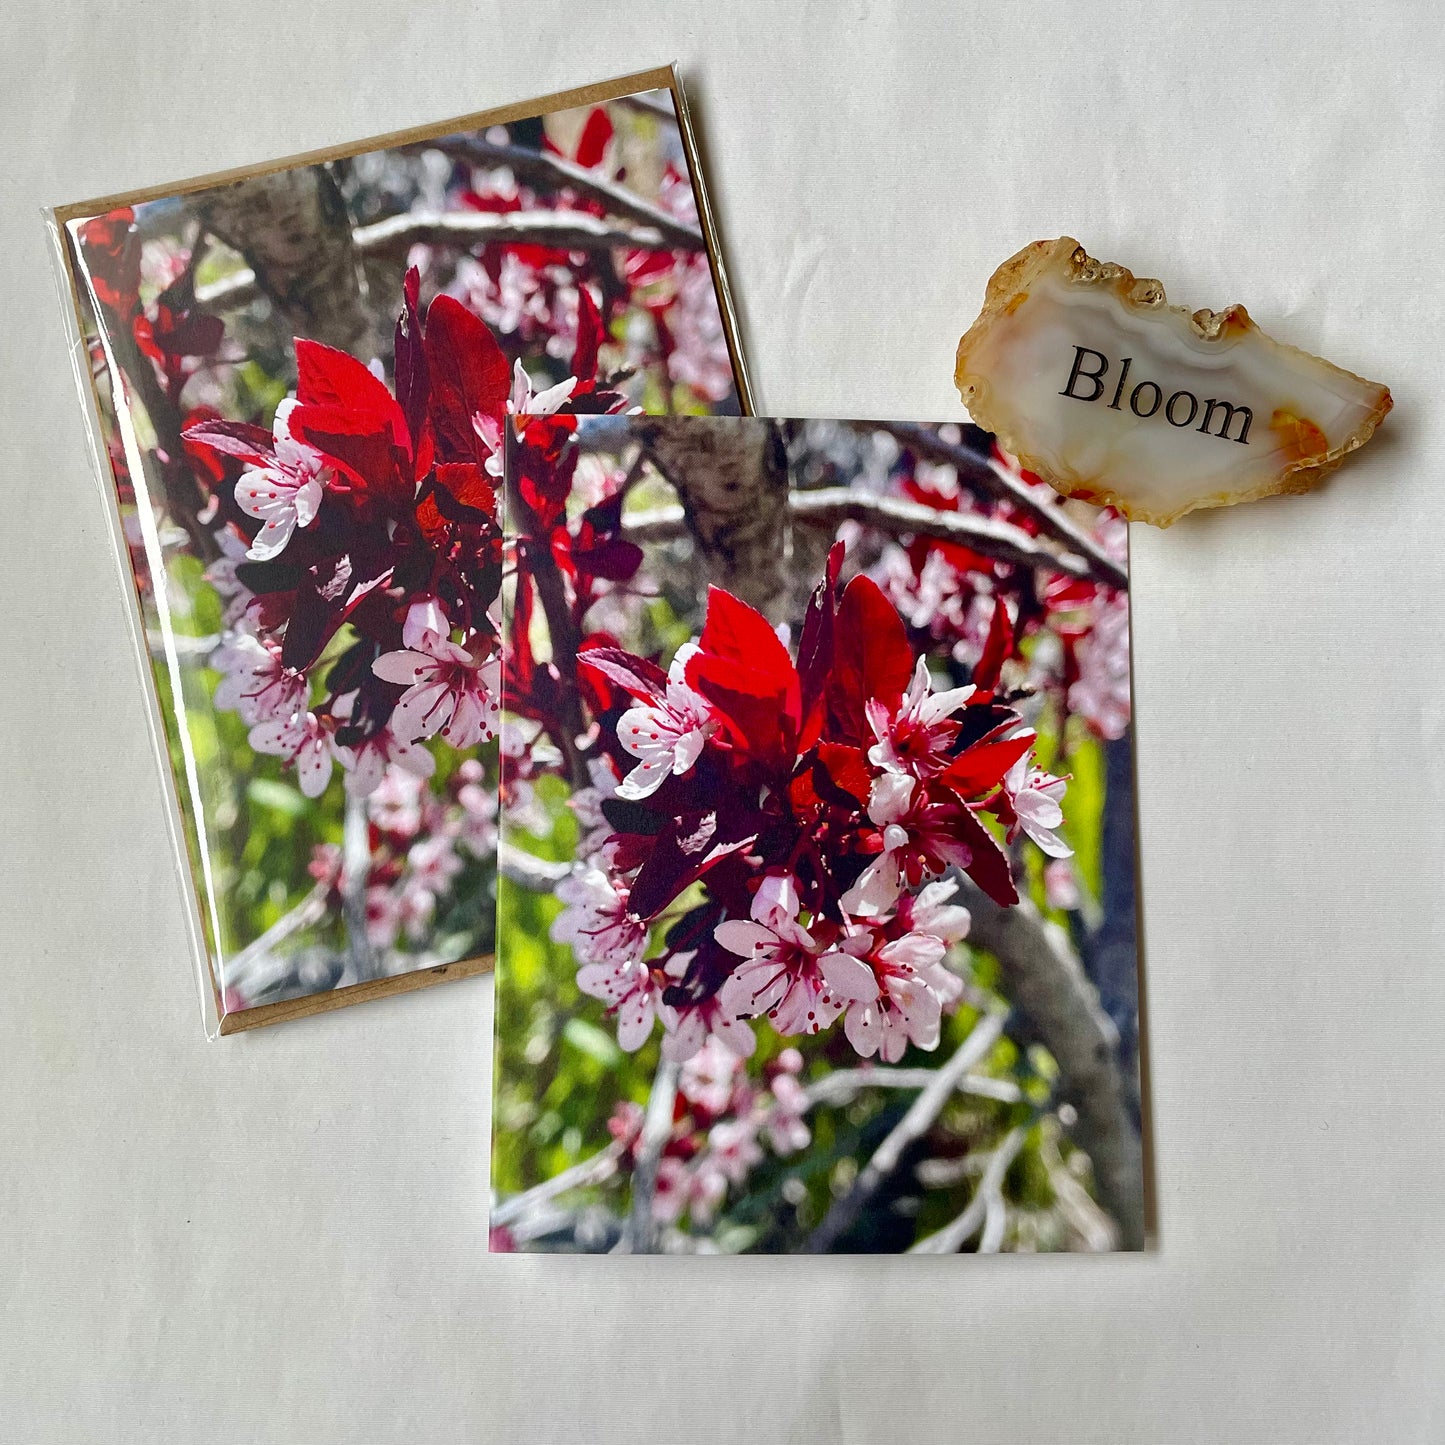 Celebration Blossoms Original Photography Greeting Card with Kraft Envelope